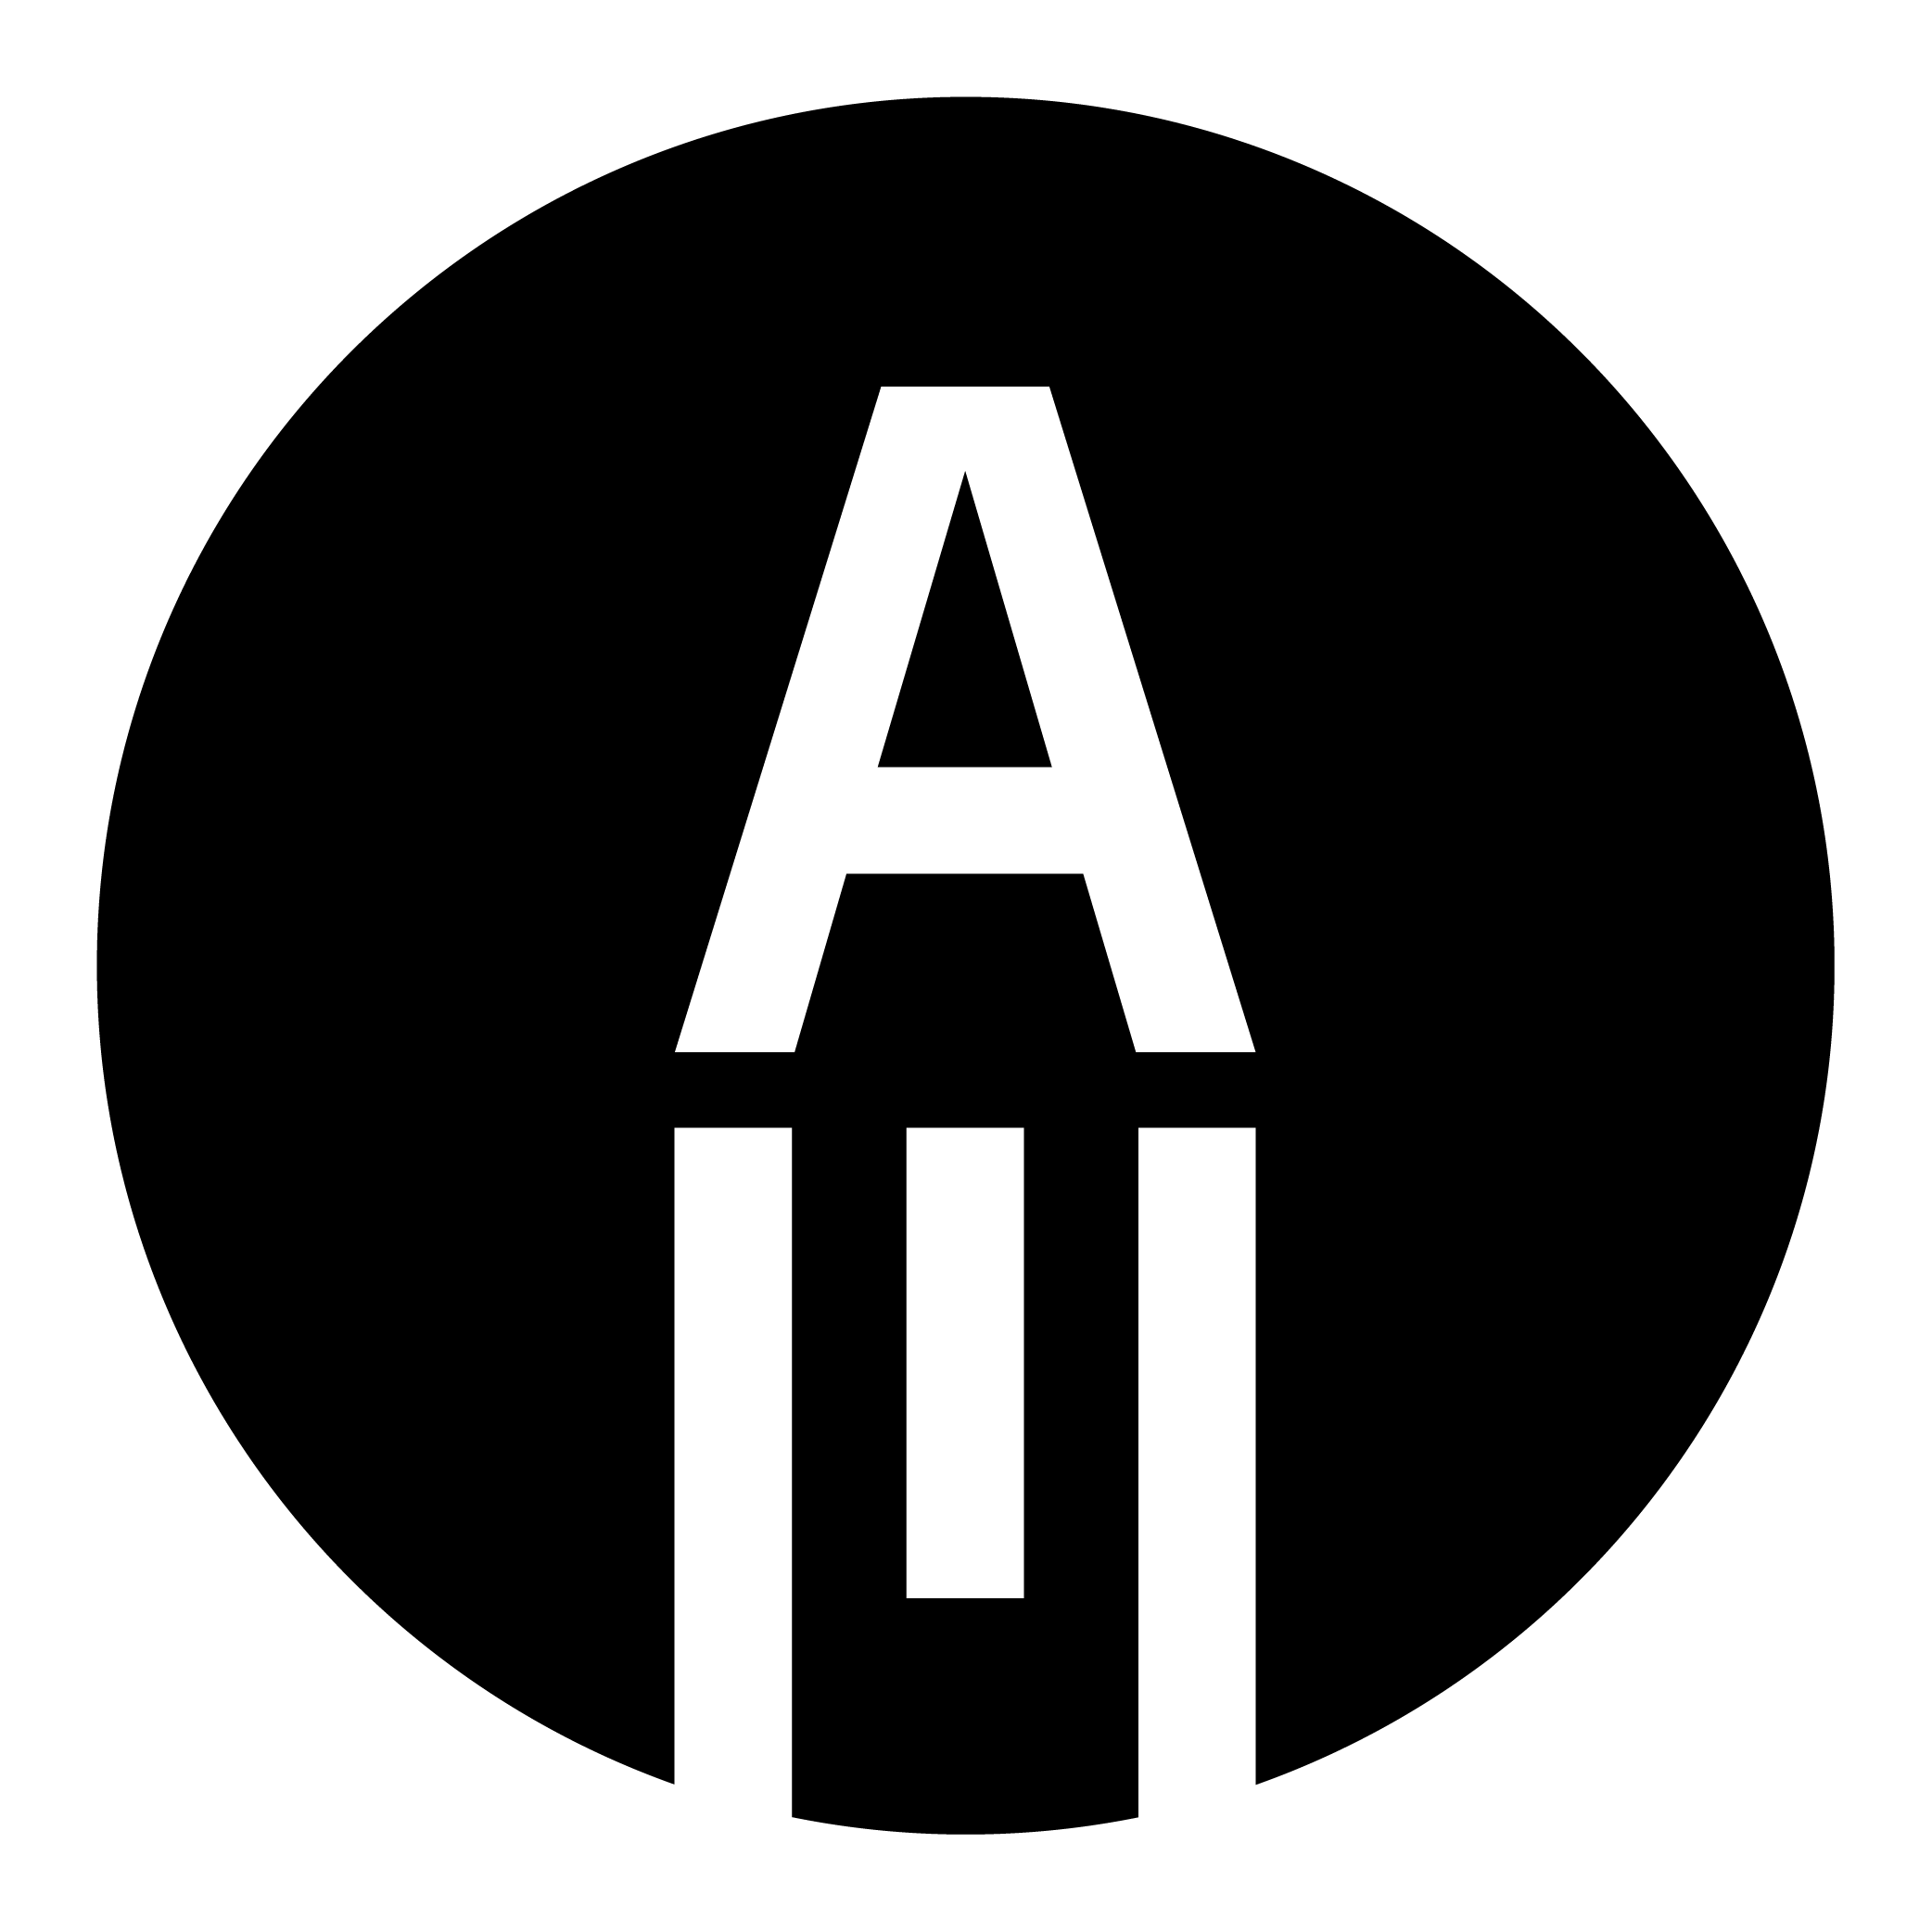 logo rond noir artline_Plan de travail 1